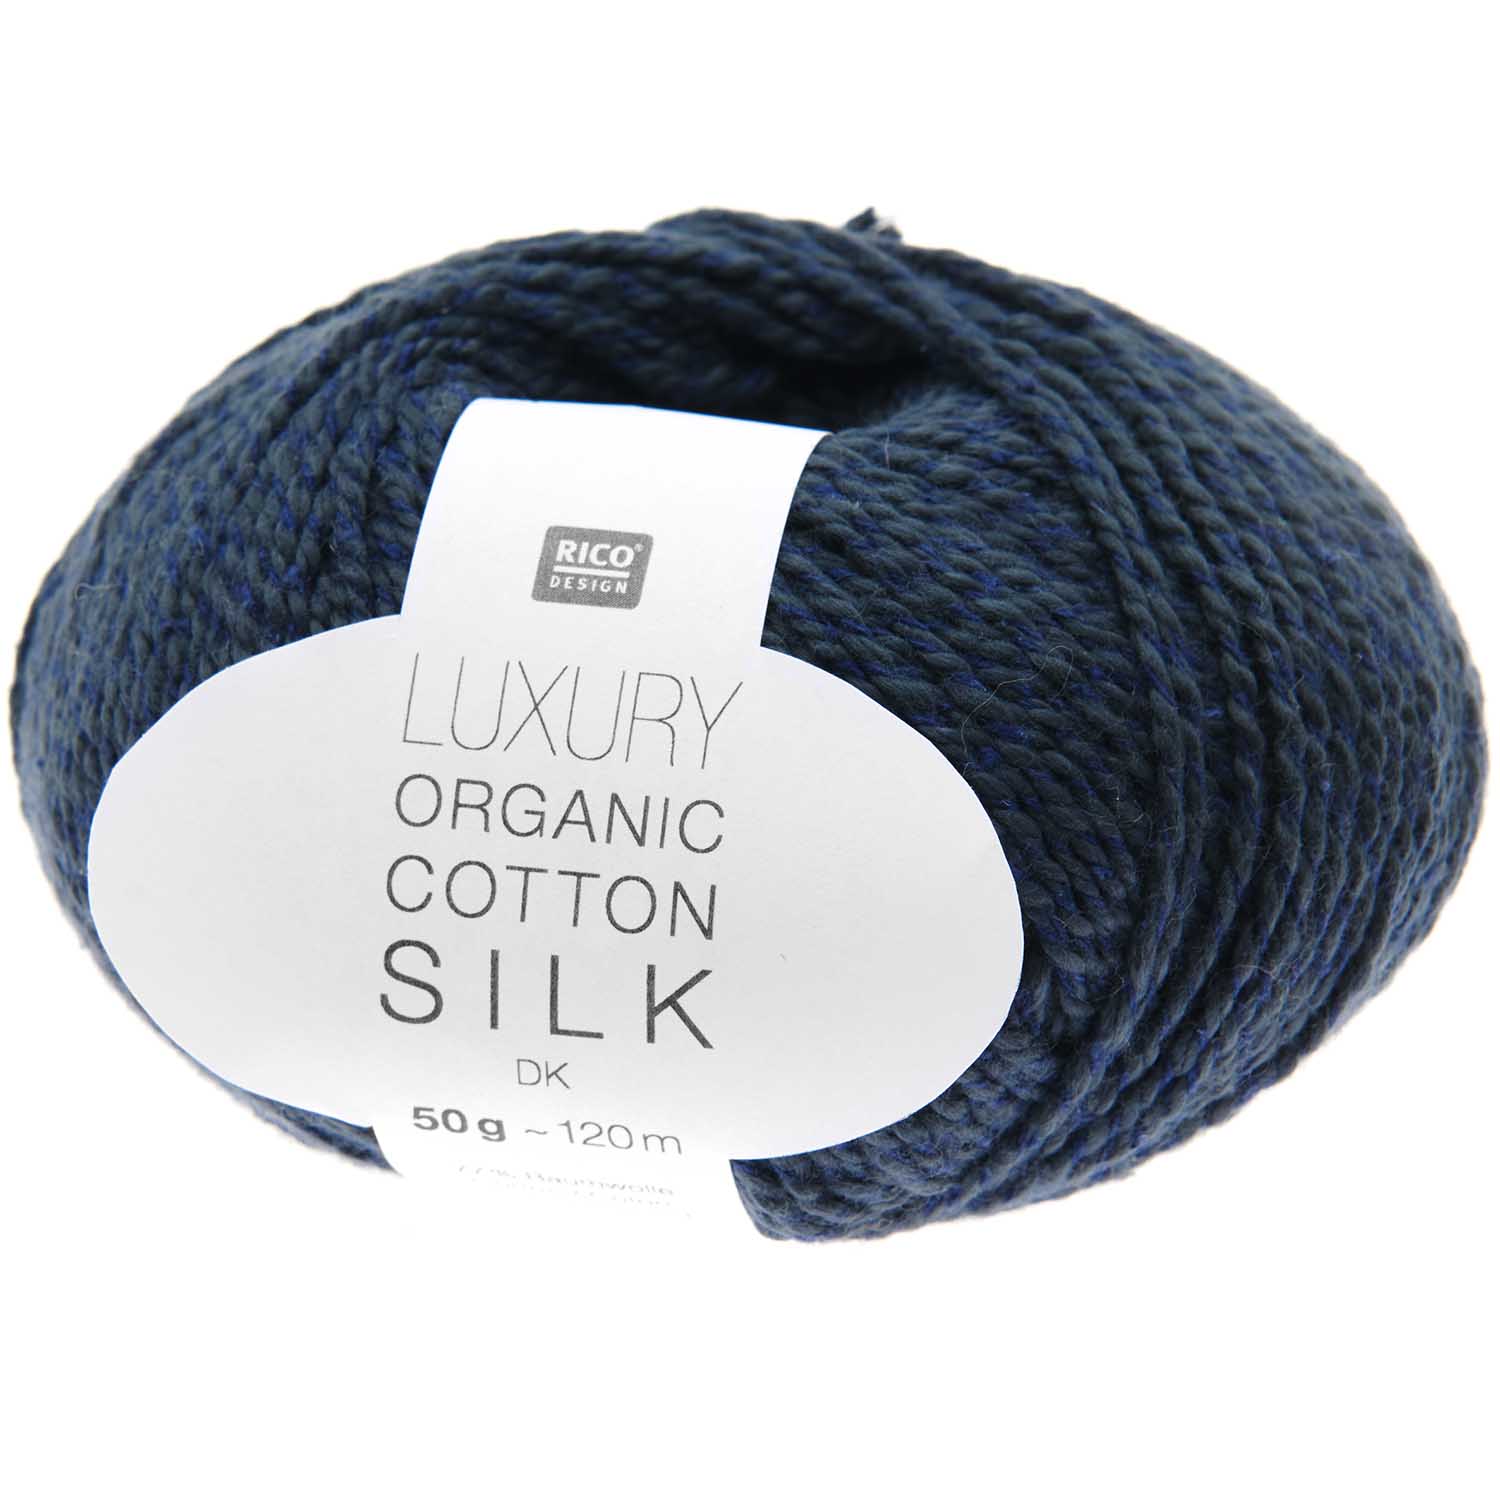 Rico Luxury Organic Cotton Silk kleur 008